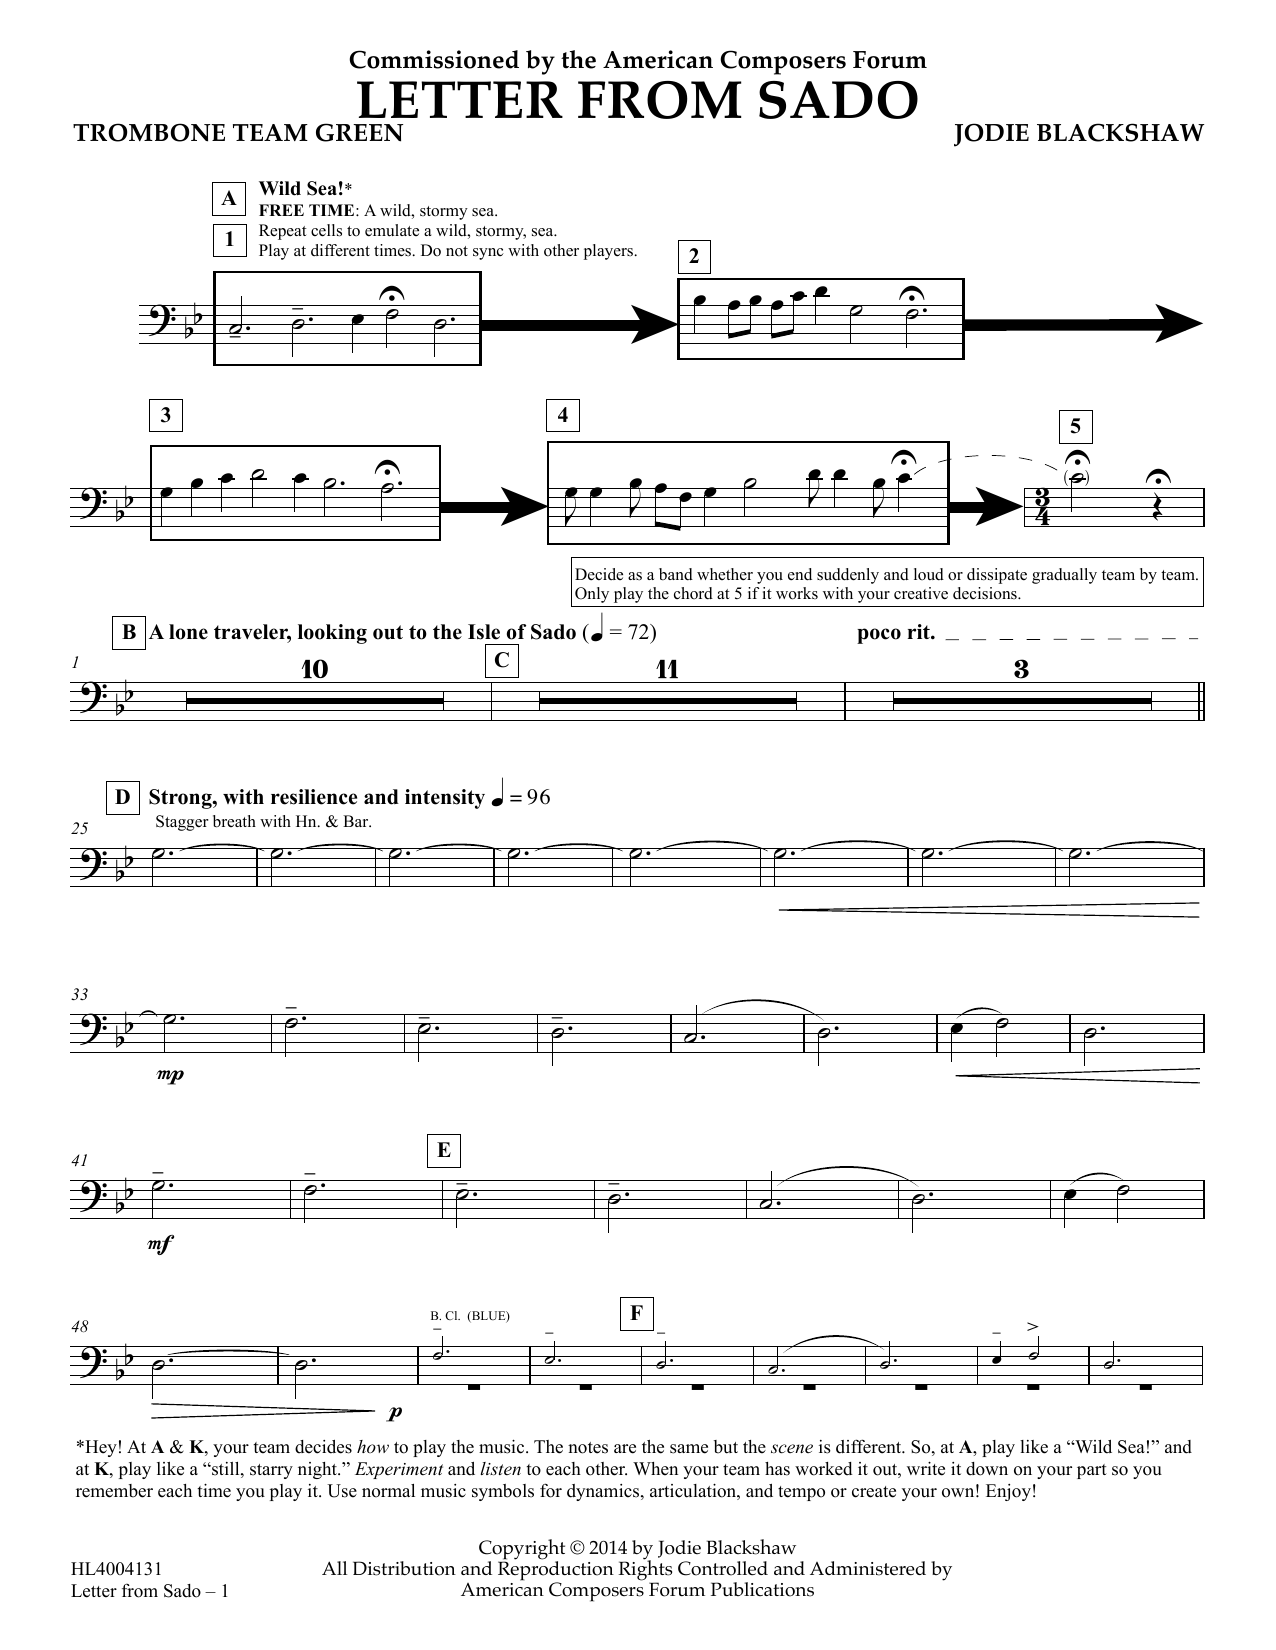 Jodie Blackshaw Letter from Sado - Trombone Team Green Sheet Music Notes & Chords for Concert Band - Download or Print PDF